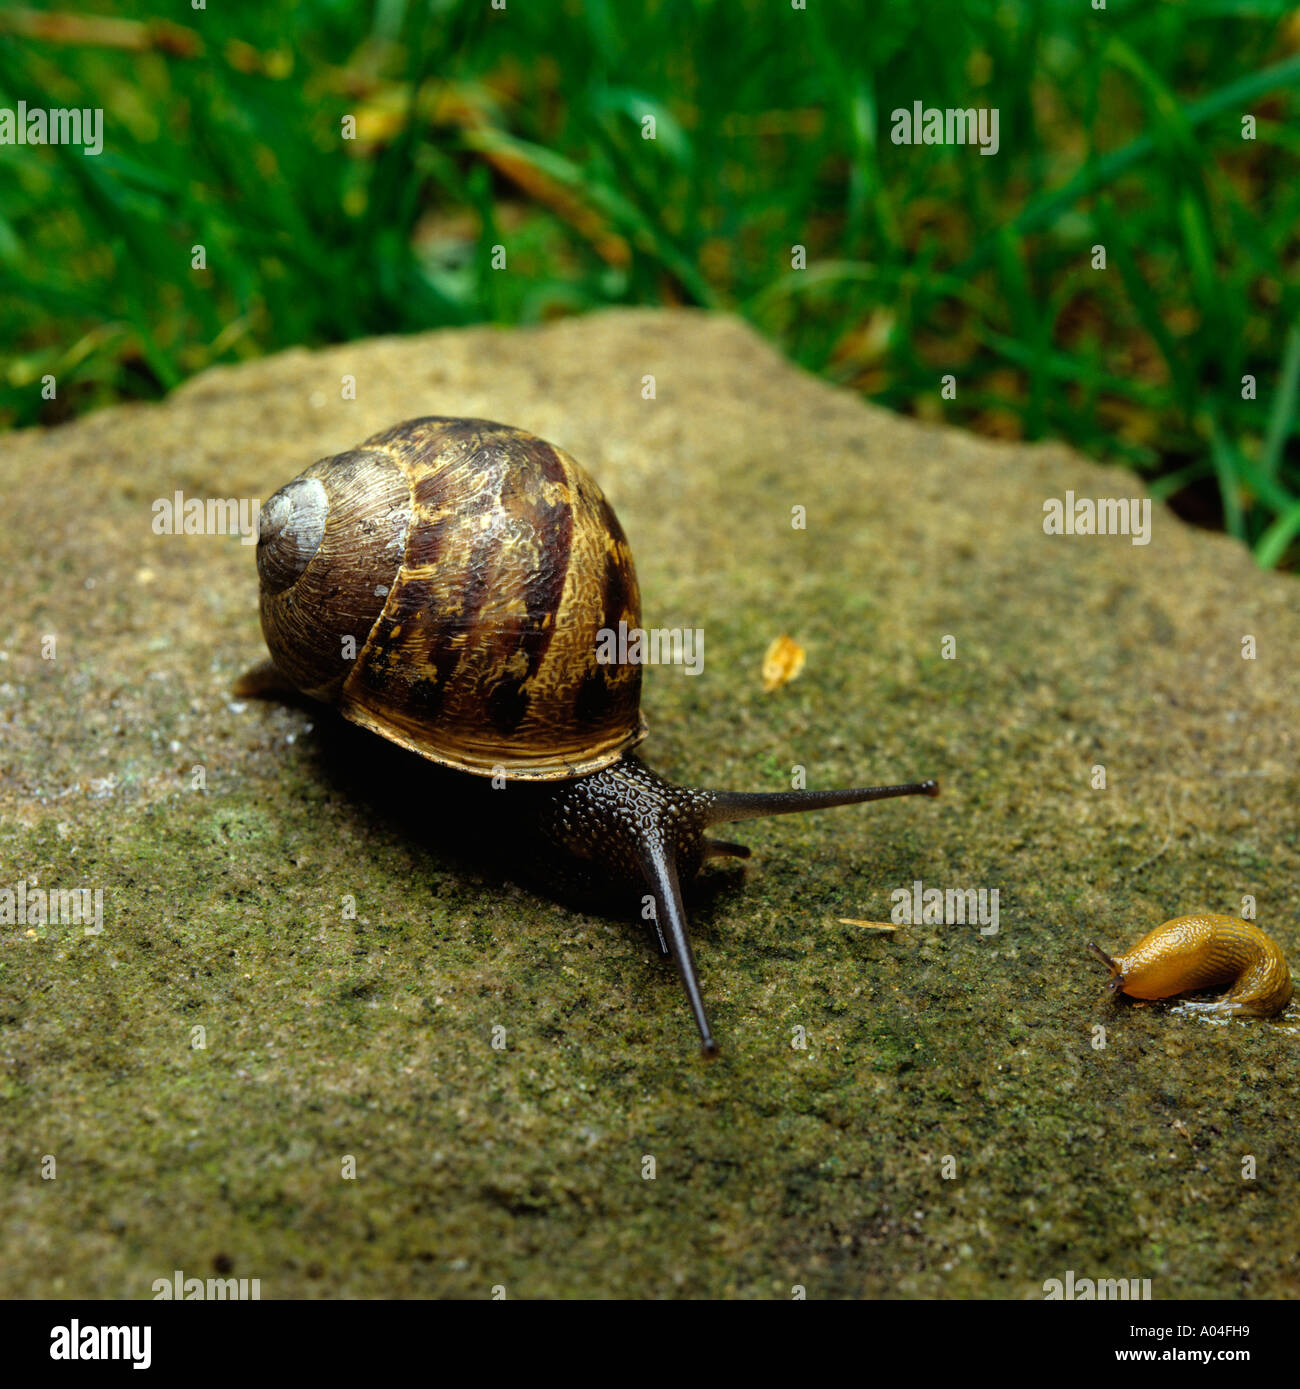 garden pests snail and slug Stock Photo